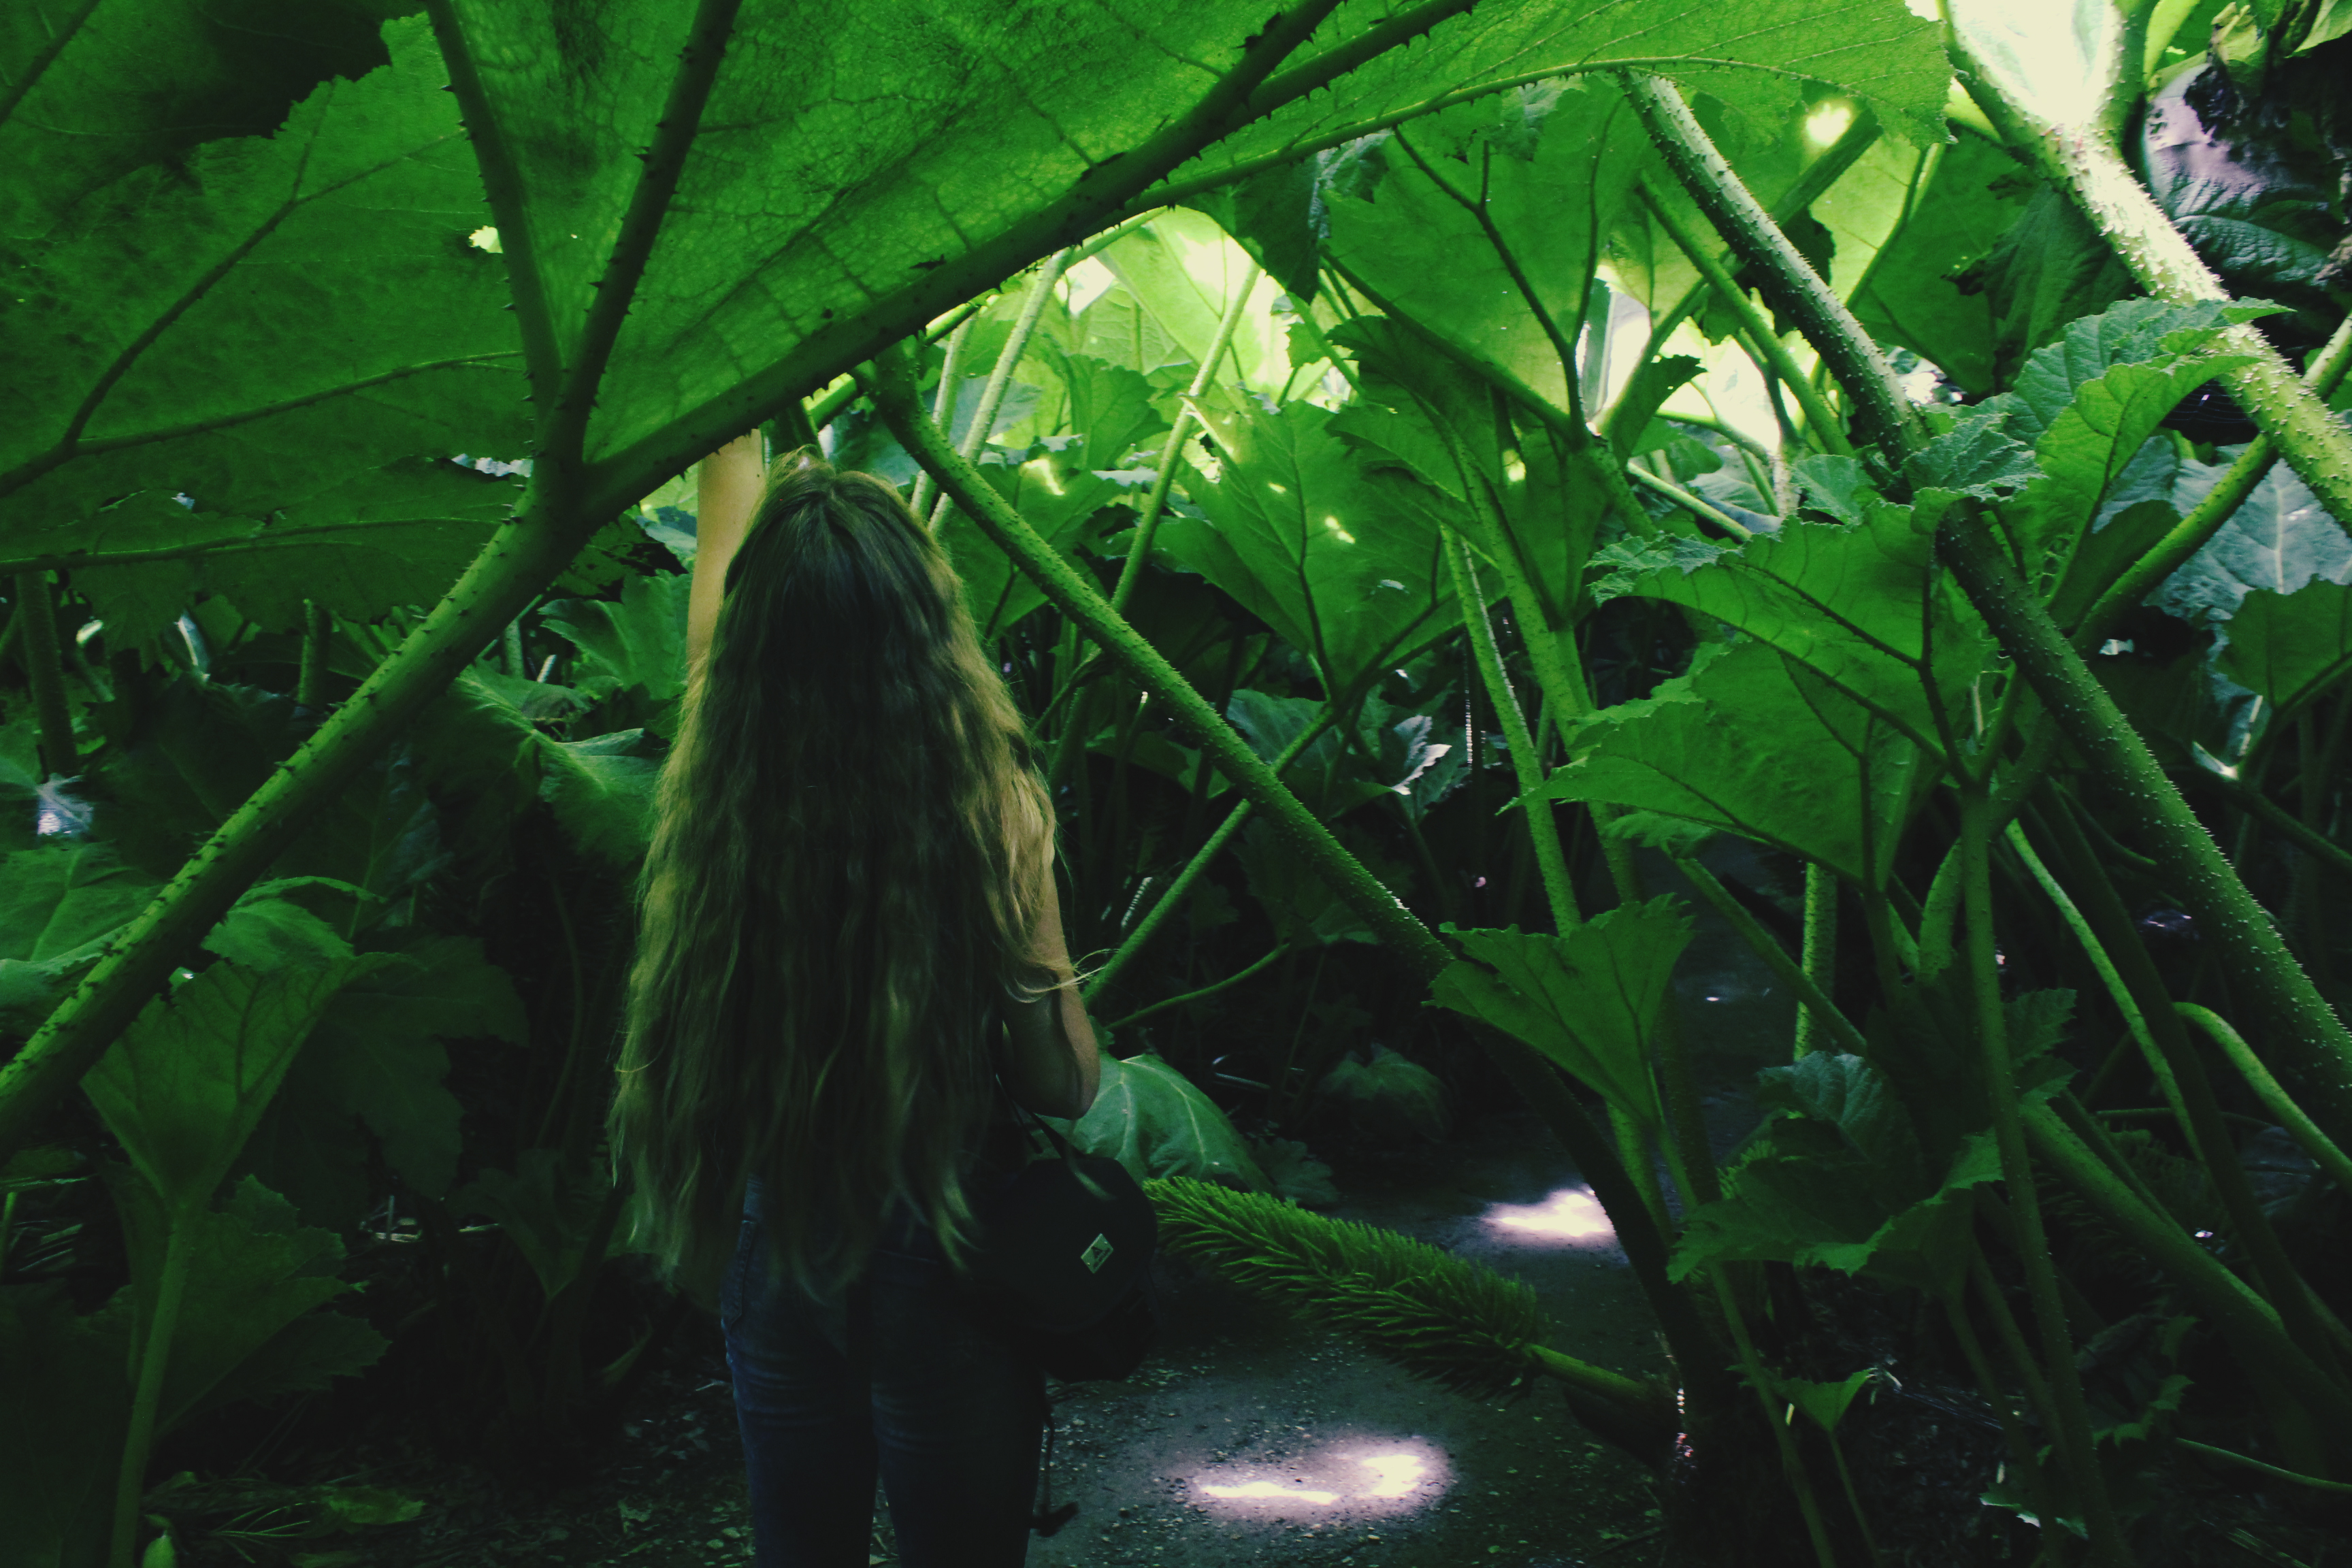 Girl with long hair beneath gunnera plants